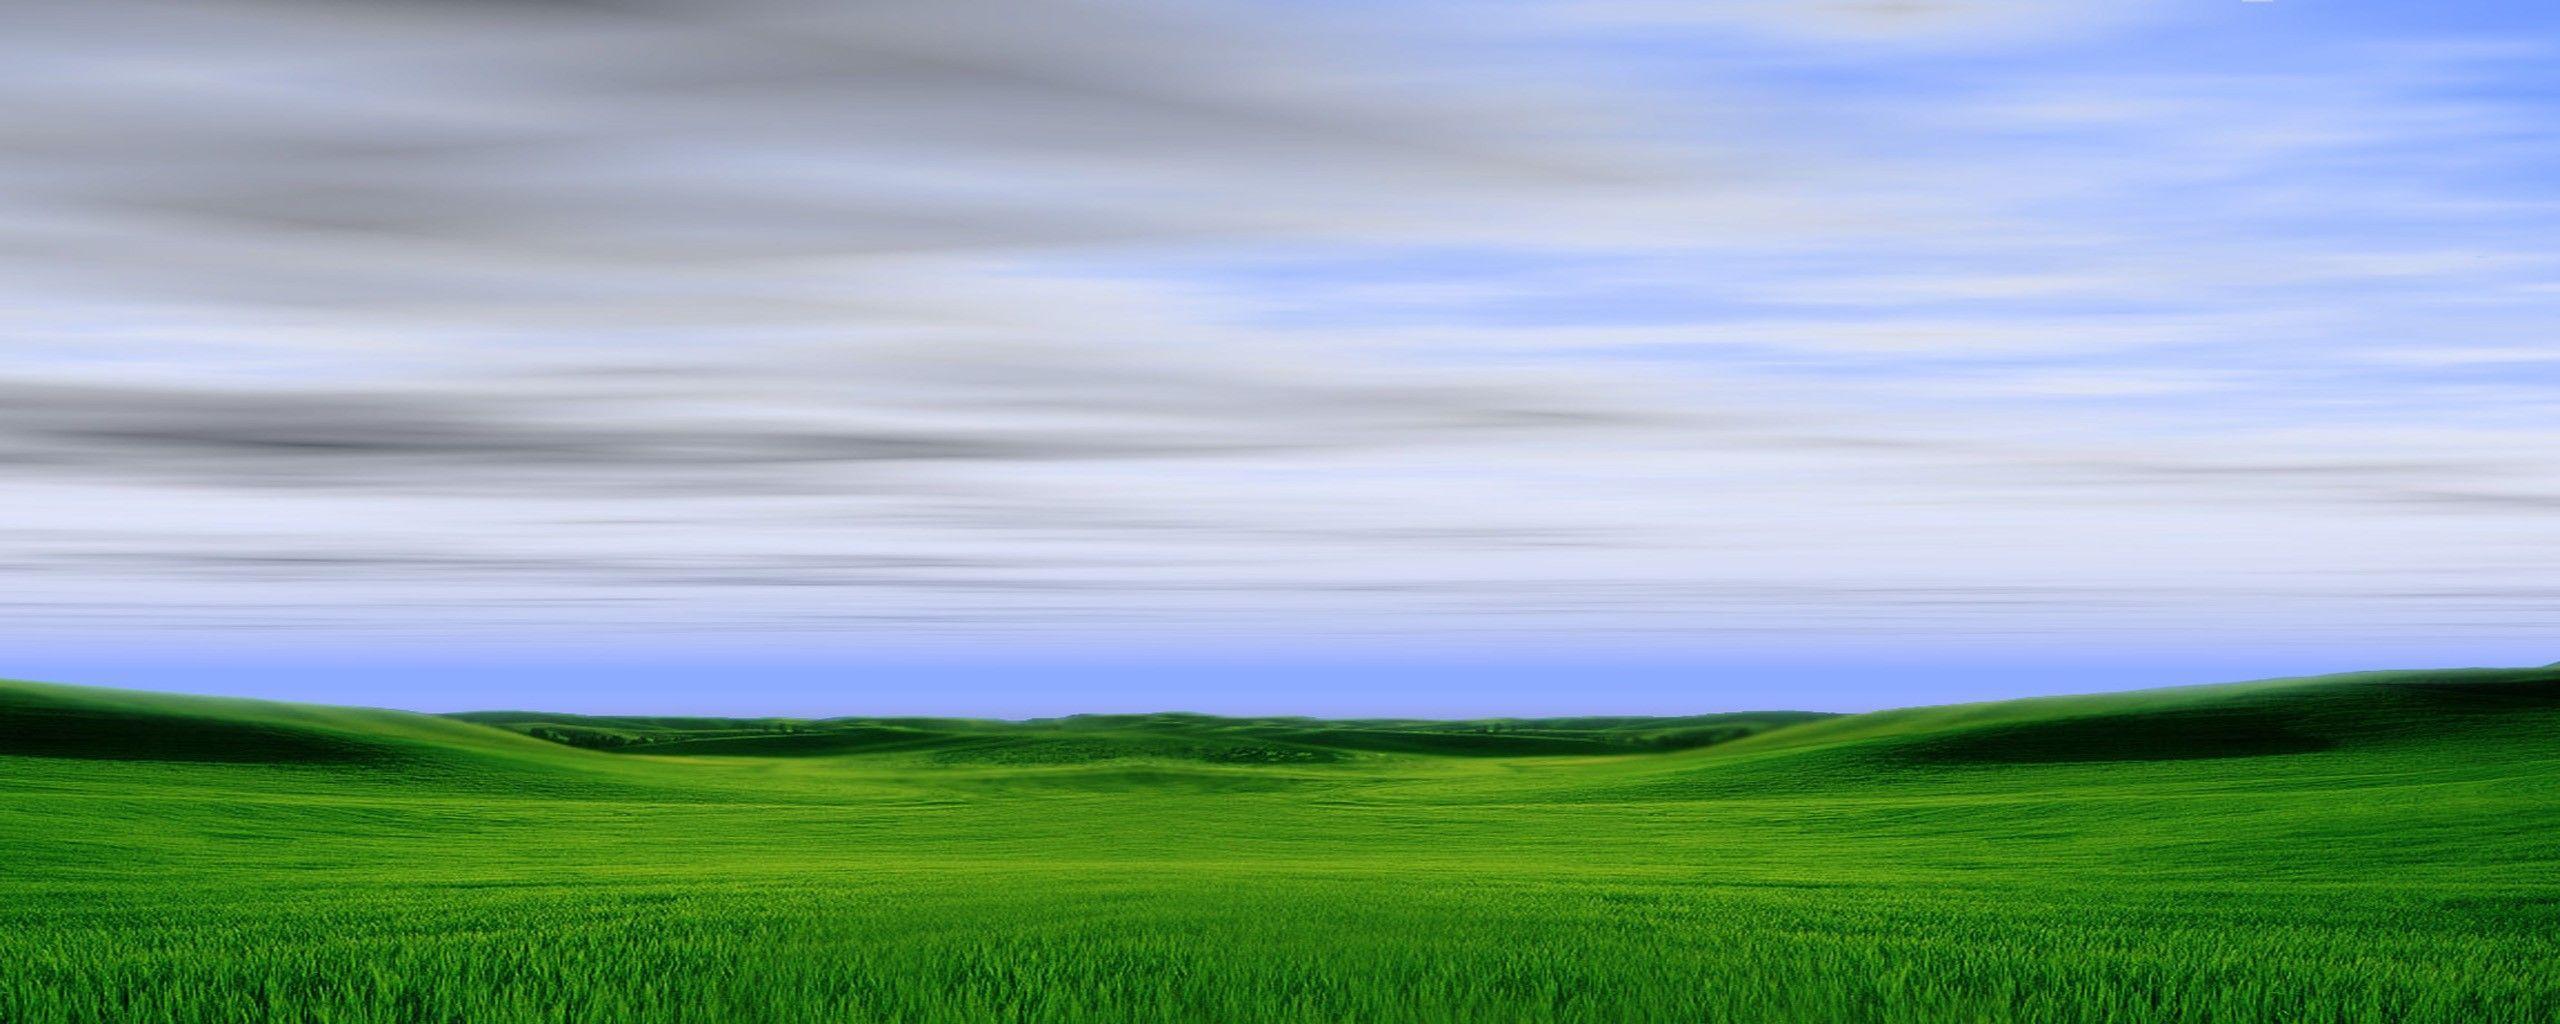 Download Clouds Landscapes Wallpaper 2560x1024